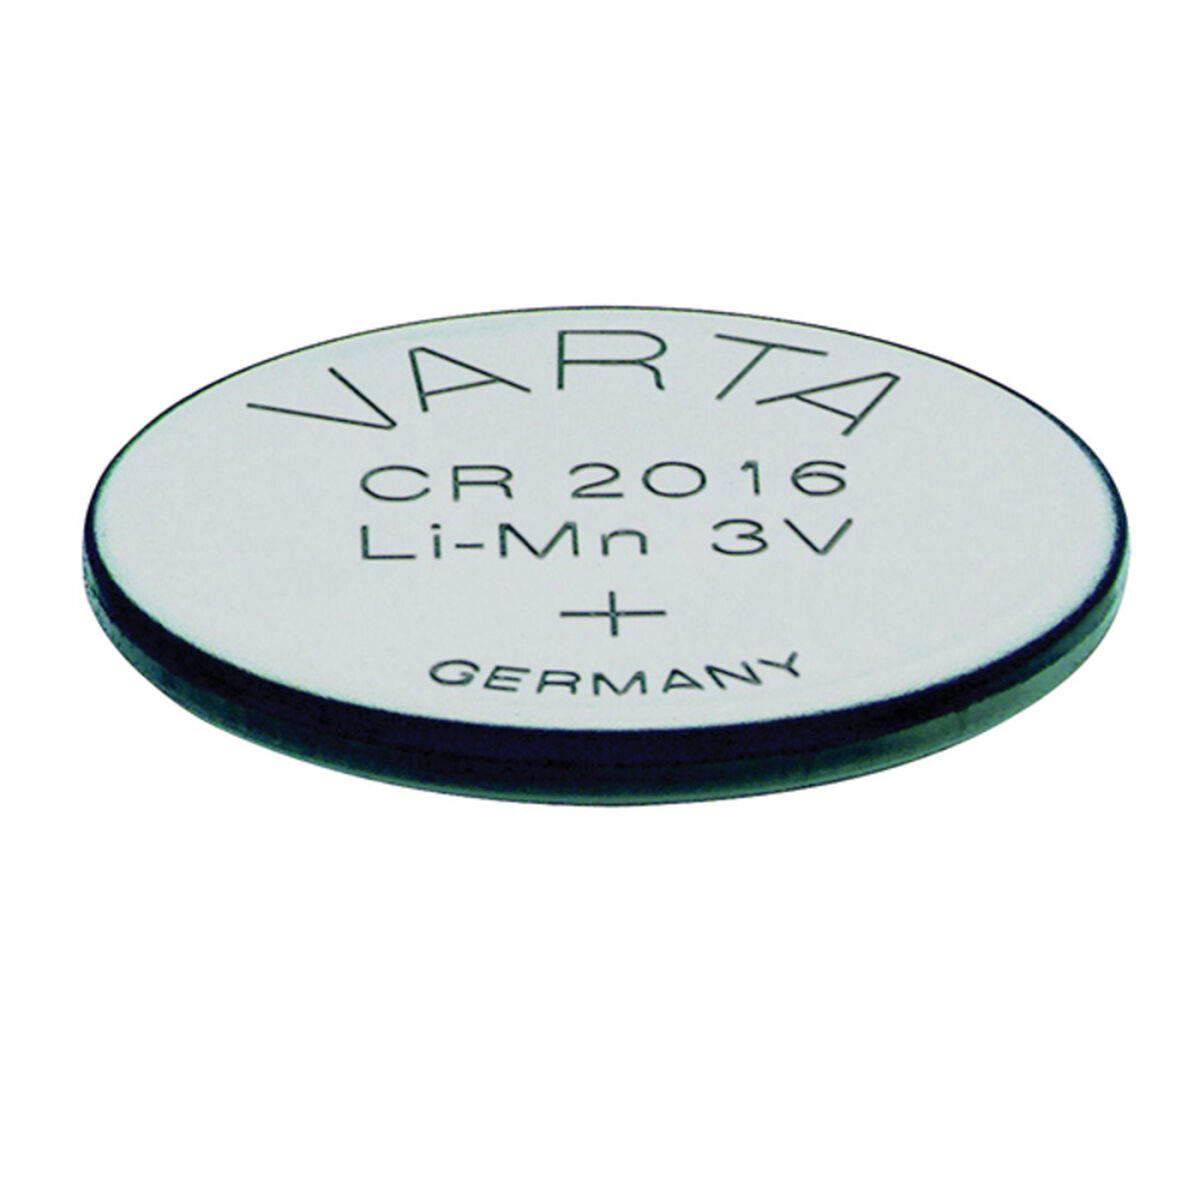 Blister) VARTA 3V Lithium 3 Ah Distancia (1er Volt, 0.09 Mando Li-MnO2, Knopfzelle, Knopfzelle CR2016 Electronics